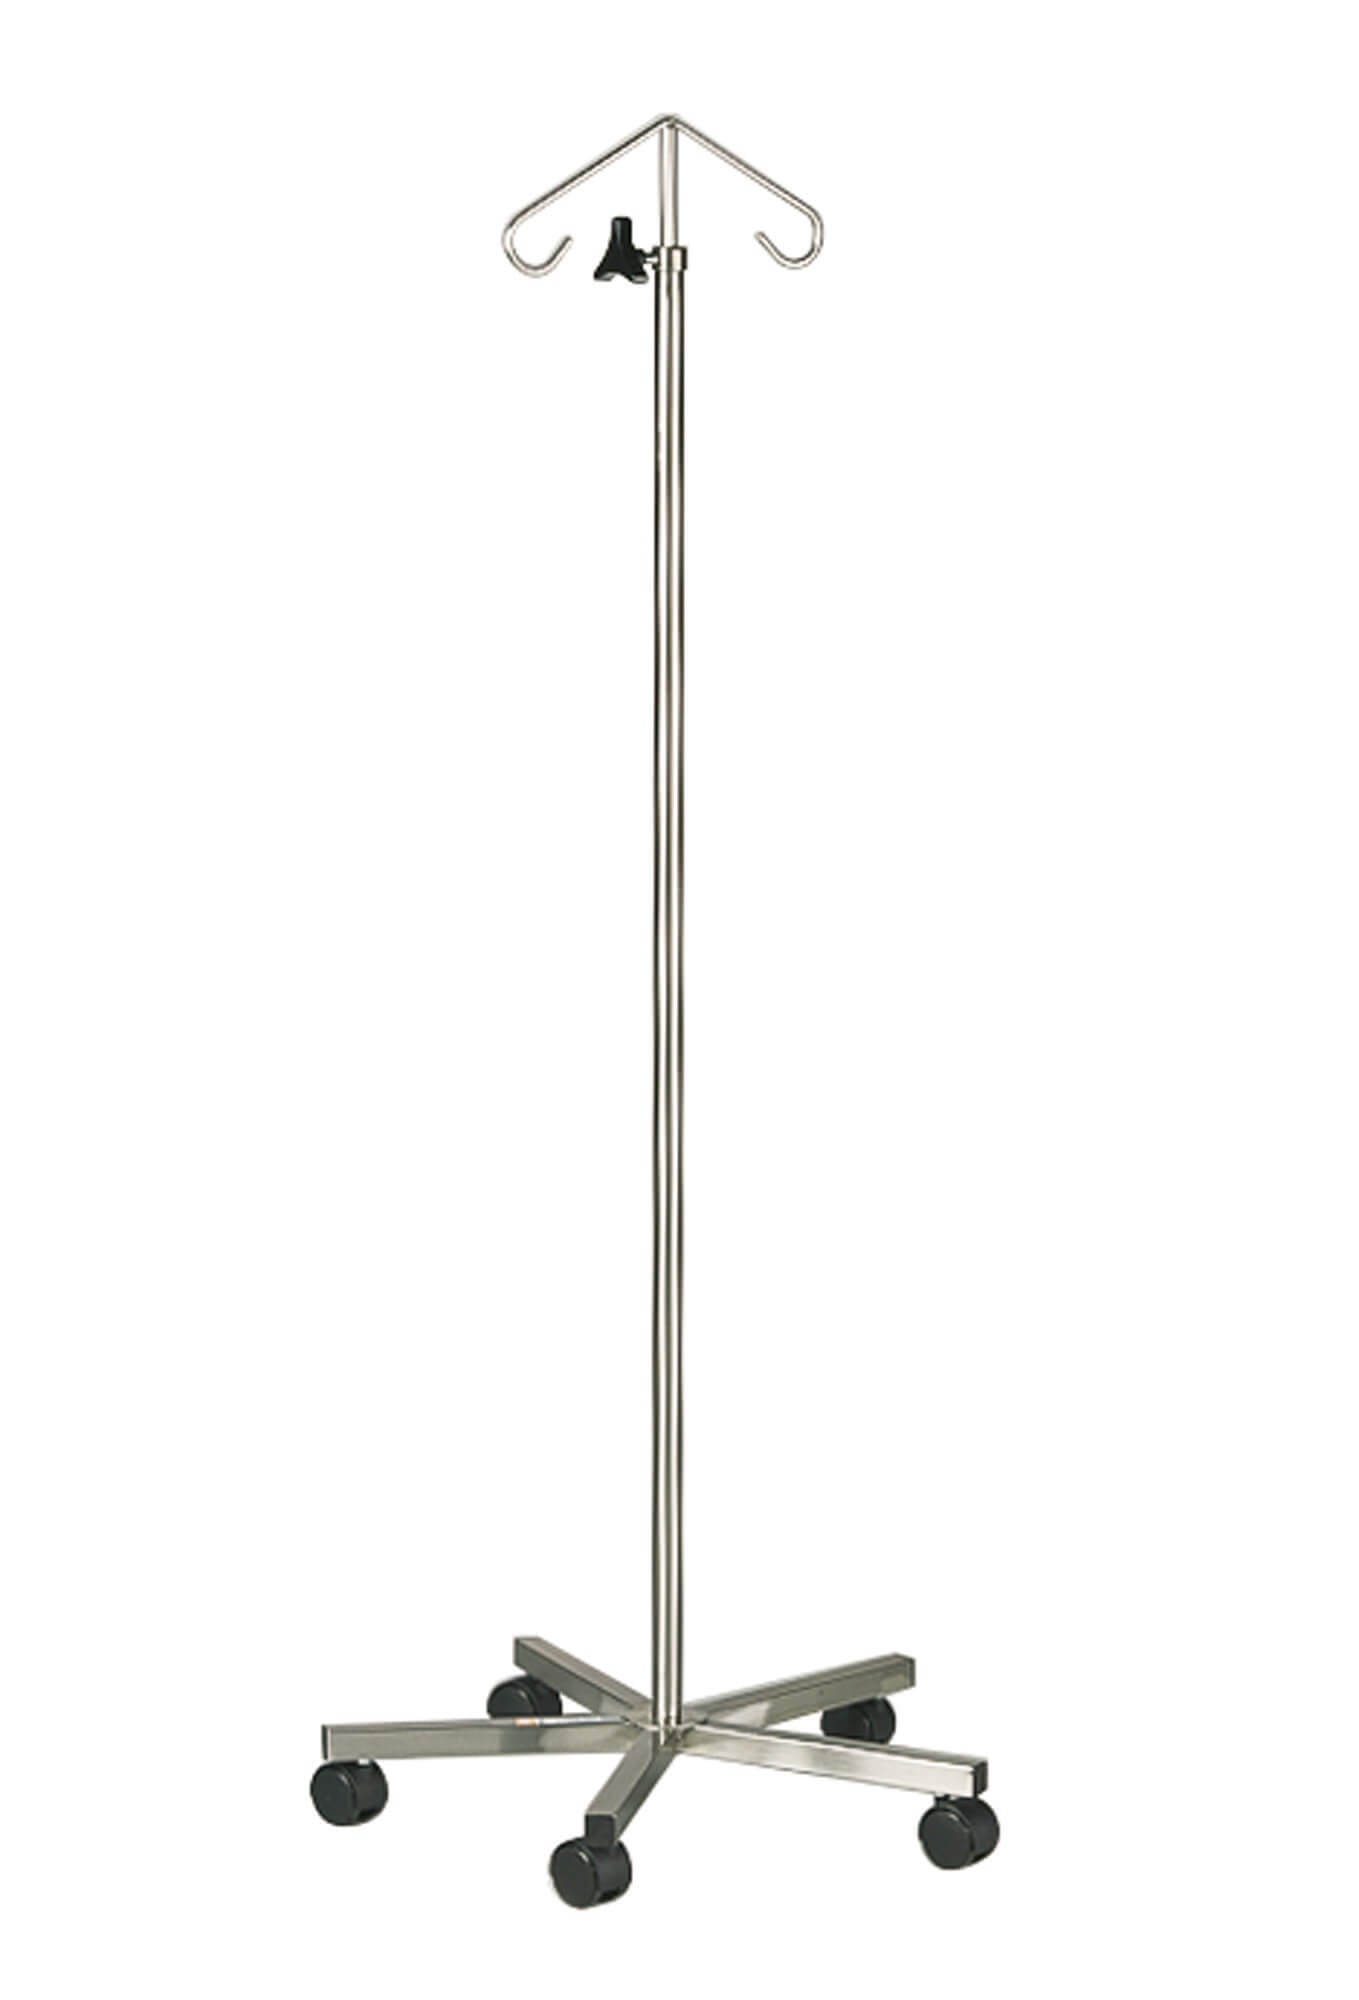 IV Pole - Stainless Steel Base, 5- Leg 2- Hook Model